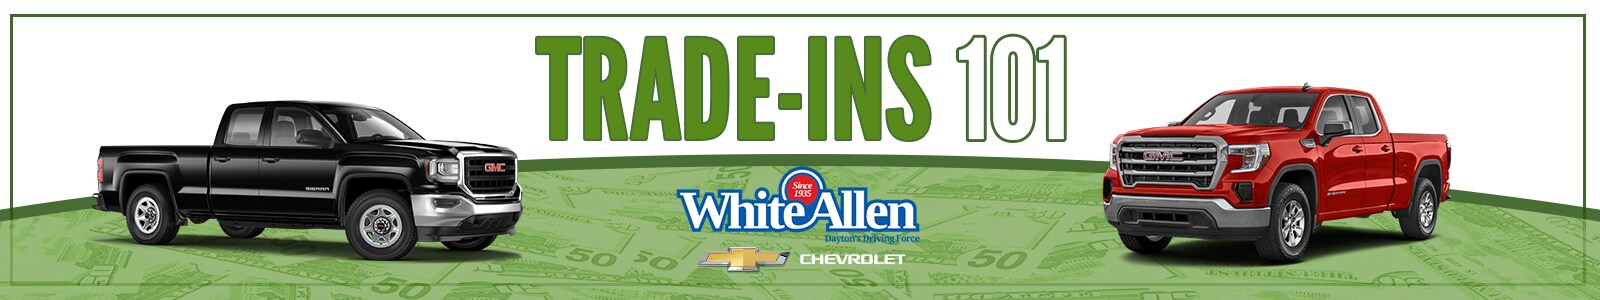 Trade-Ins 101 | White Allen Chevrolet | Dayton, OH